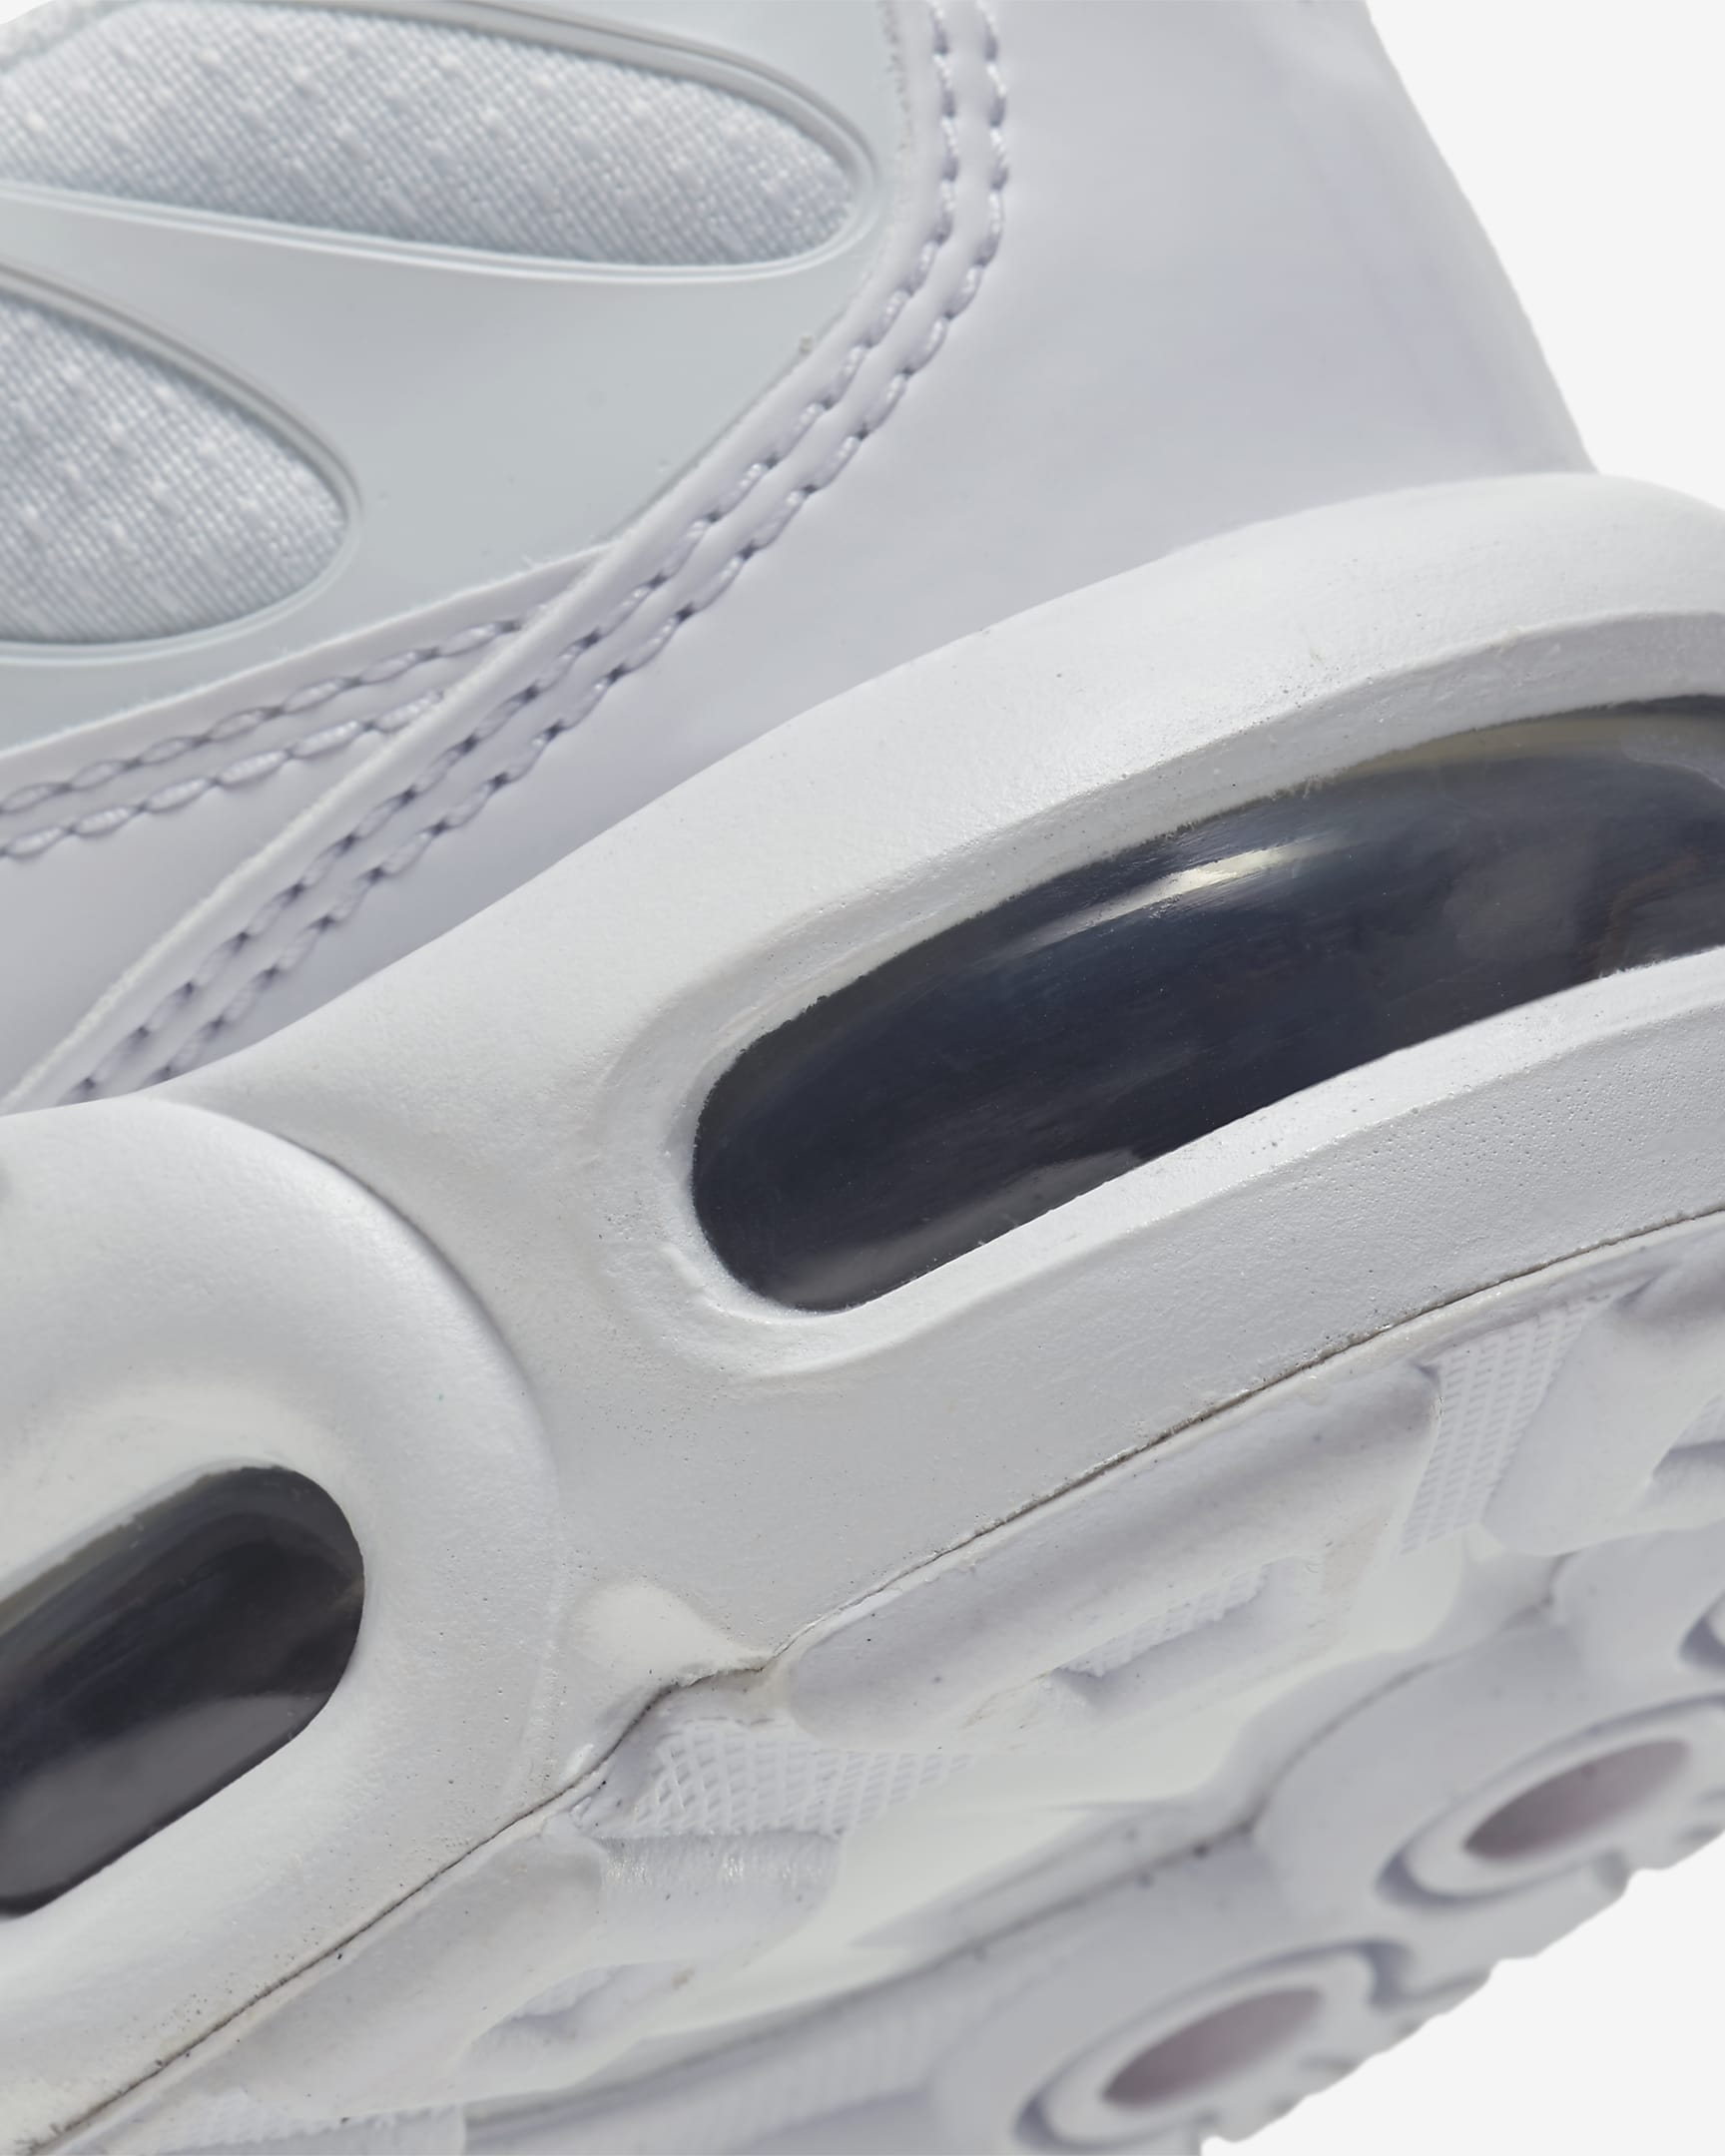 Nike Air Max Plus-sko til større børn - hvid/Metallic Silver/hvid